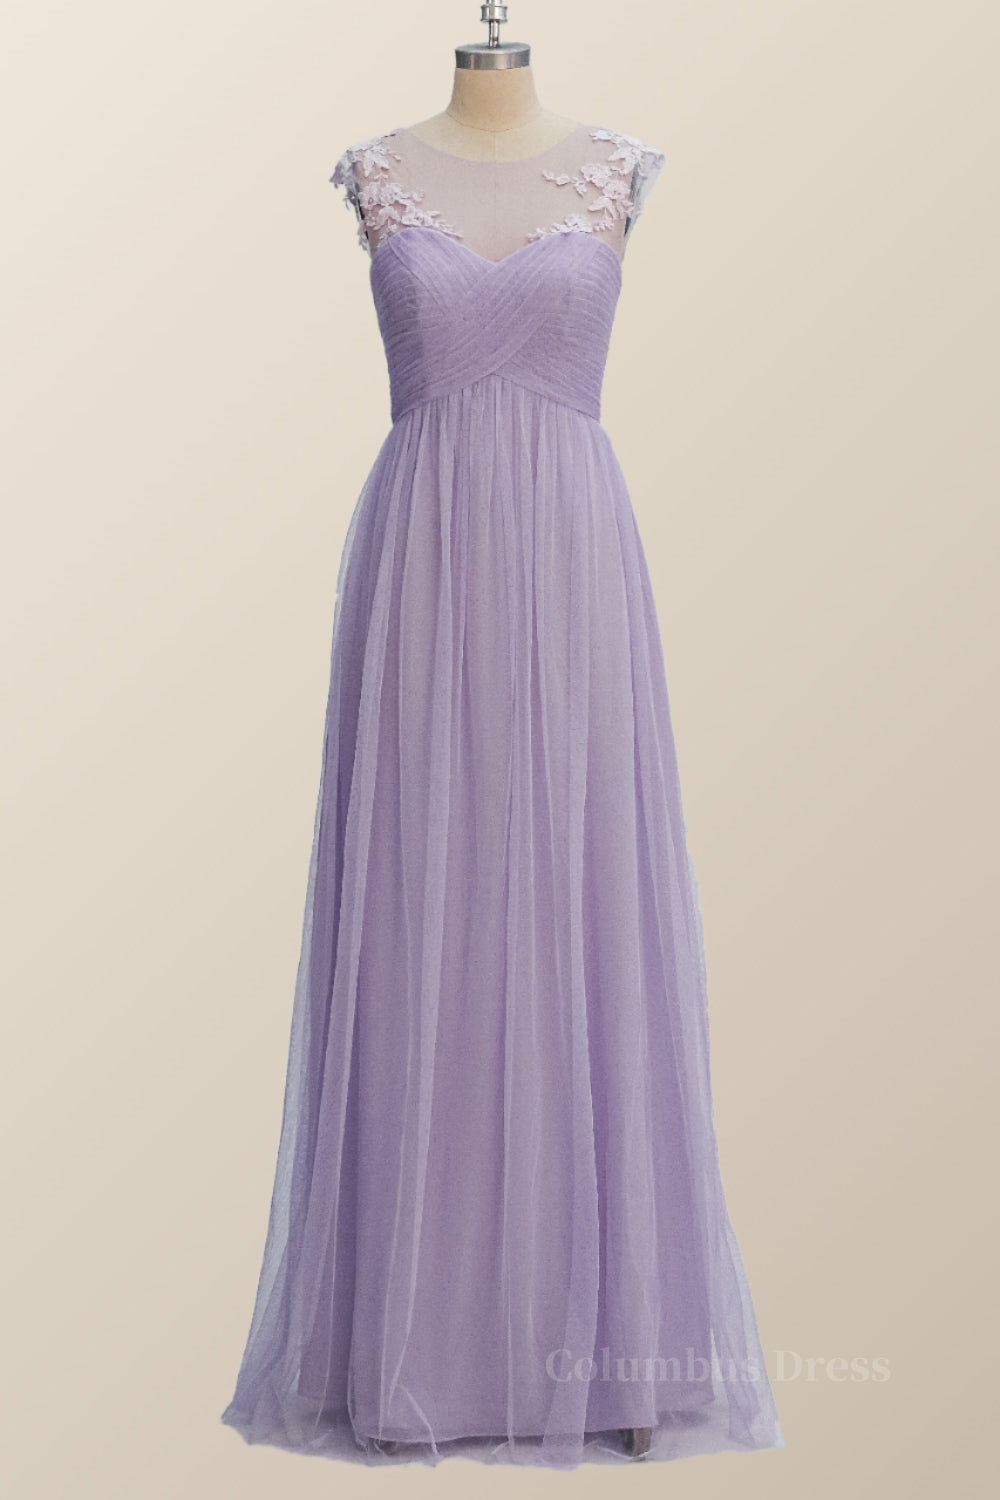 Lavender Illusion Scoop Lace Appliques A-line Corset Bridesmaid Dress outfit, Classy Gown